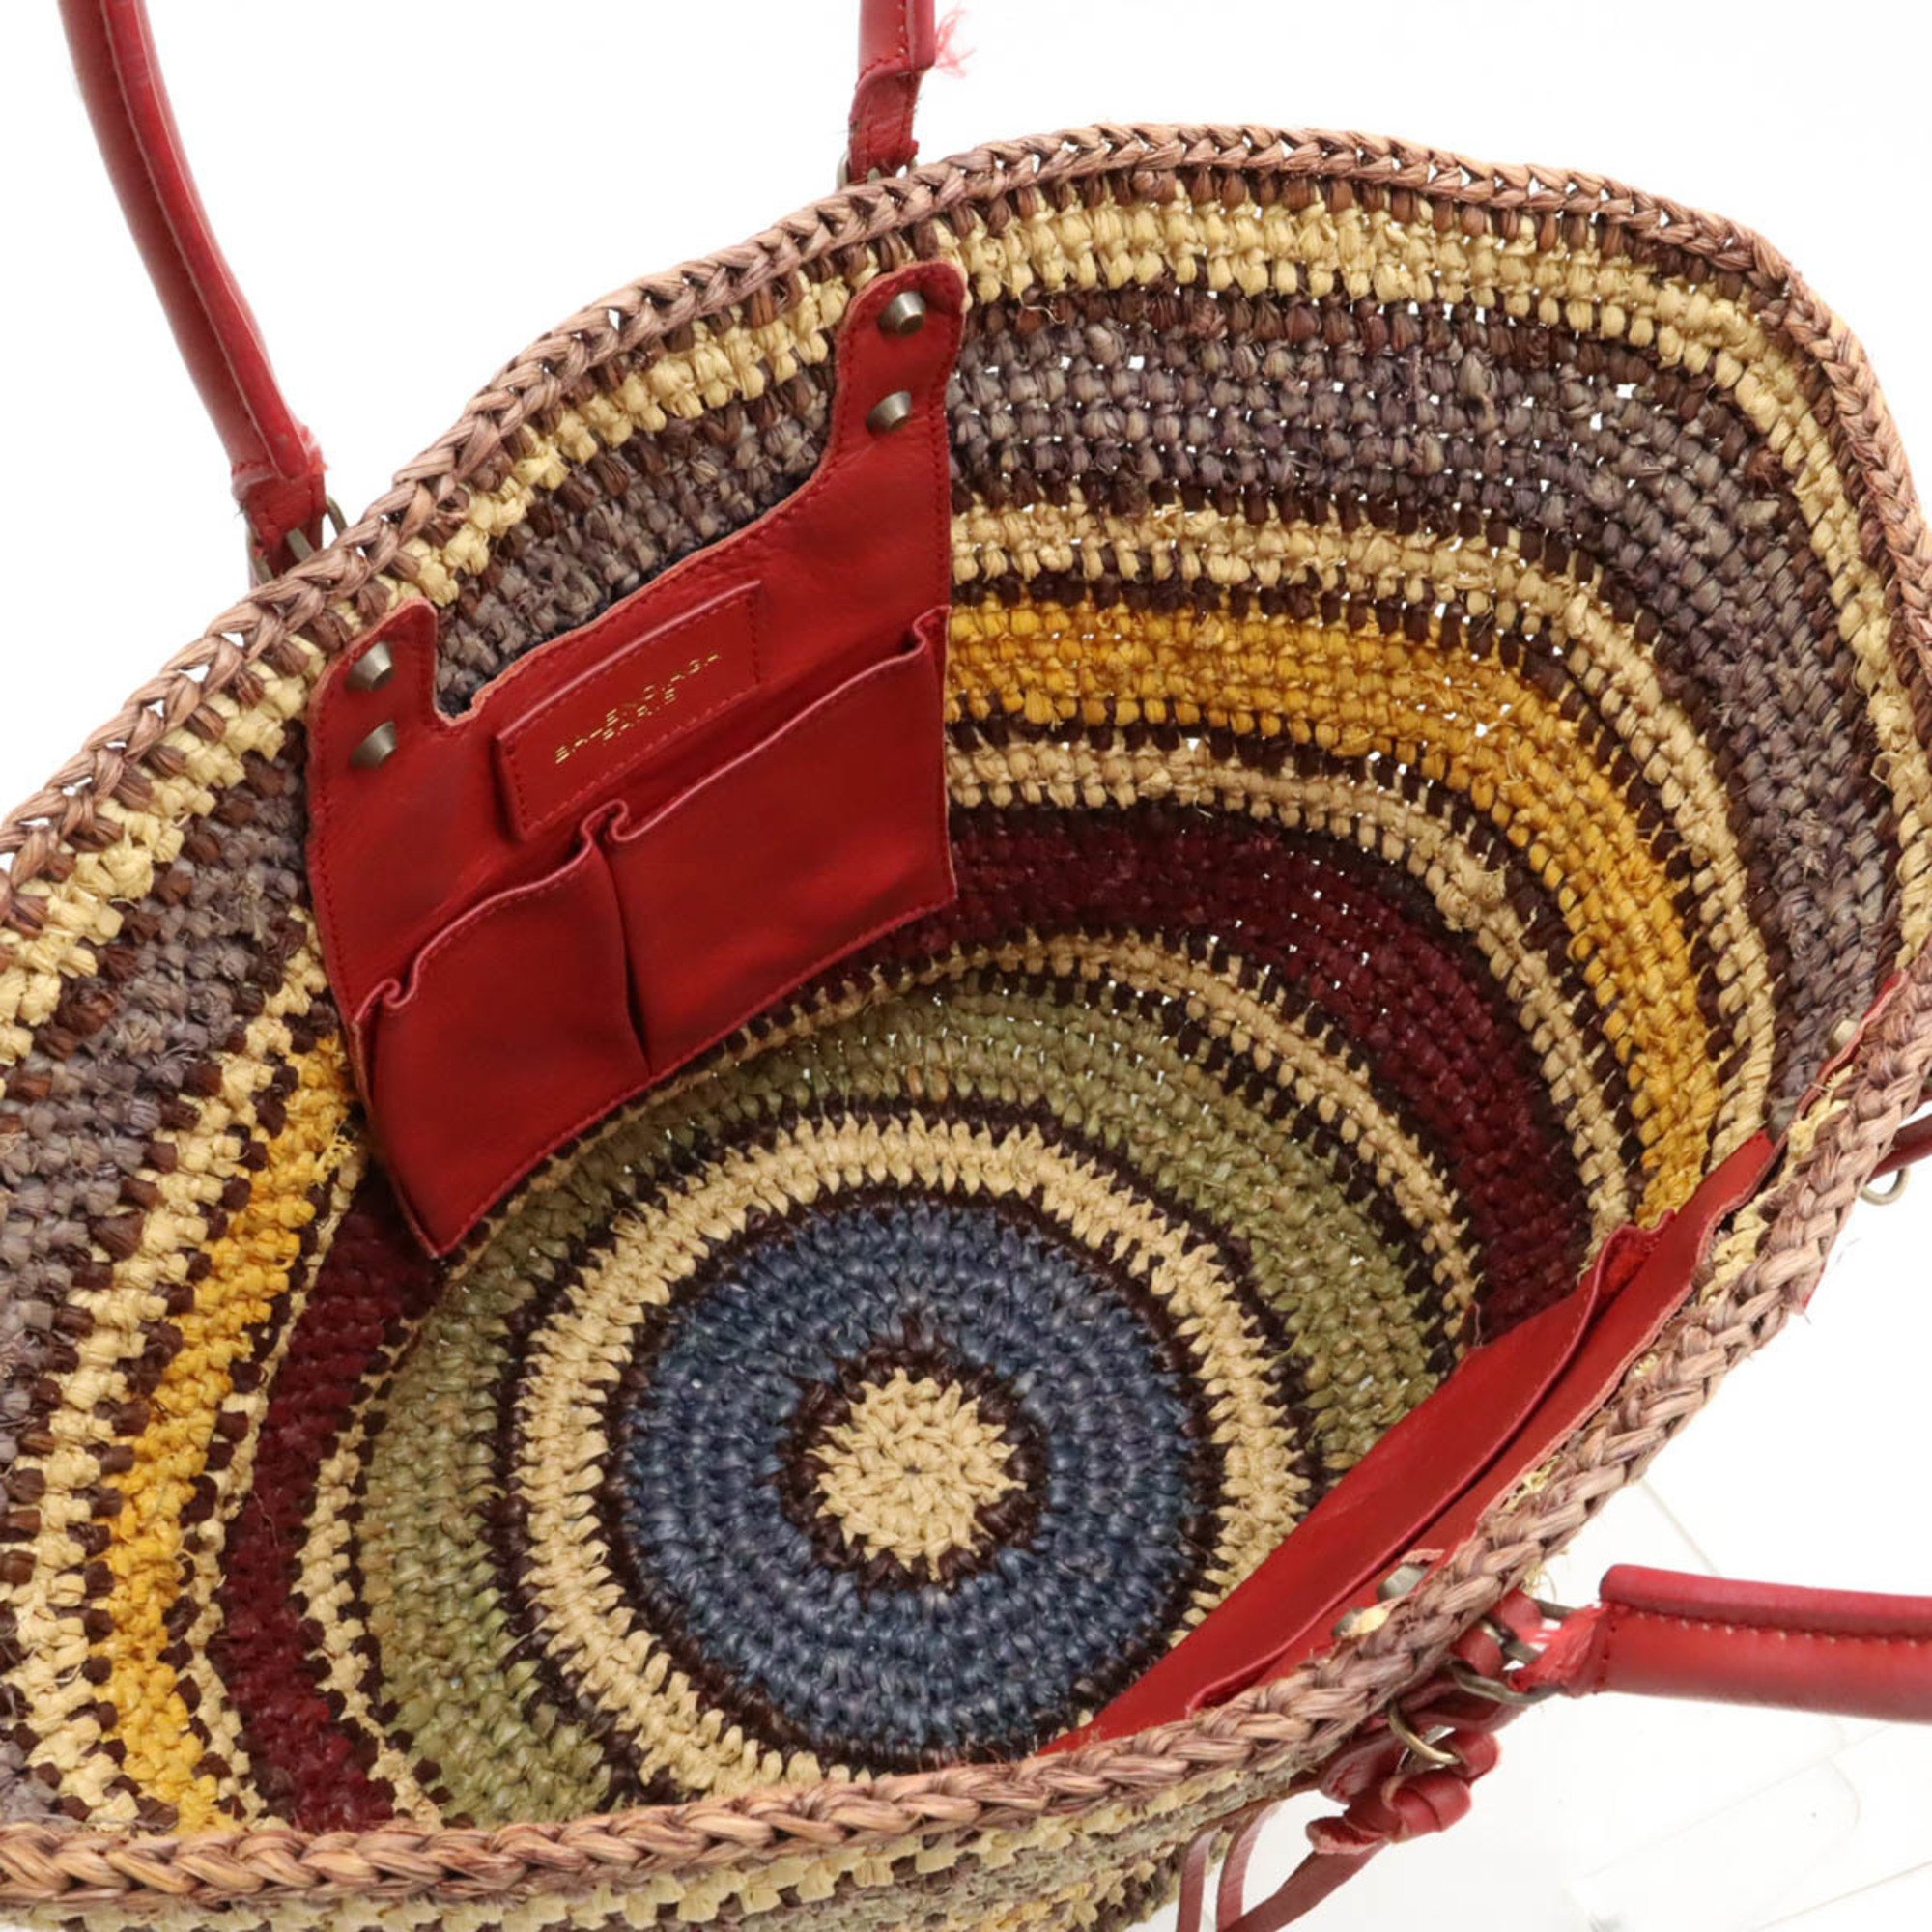 BALENCIAGA Basket bag, tote handbag, raffia, straw, leather, multicolor, red, 286370